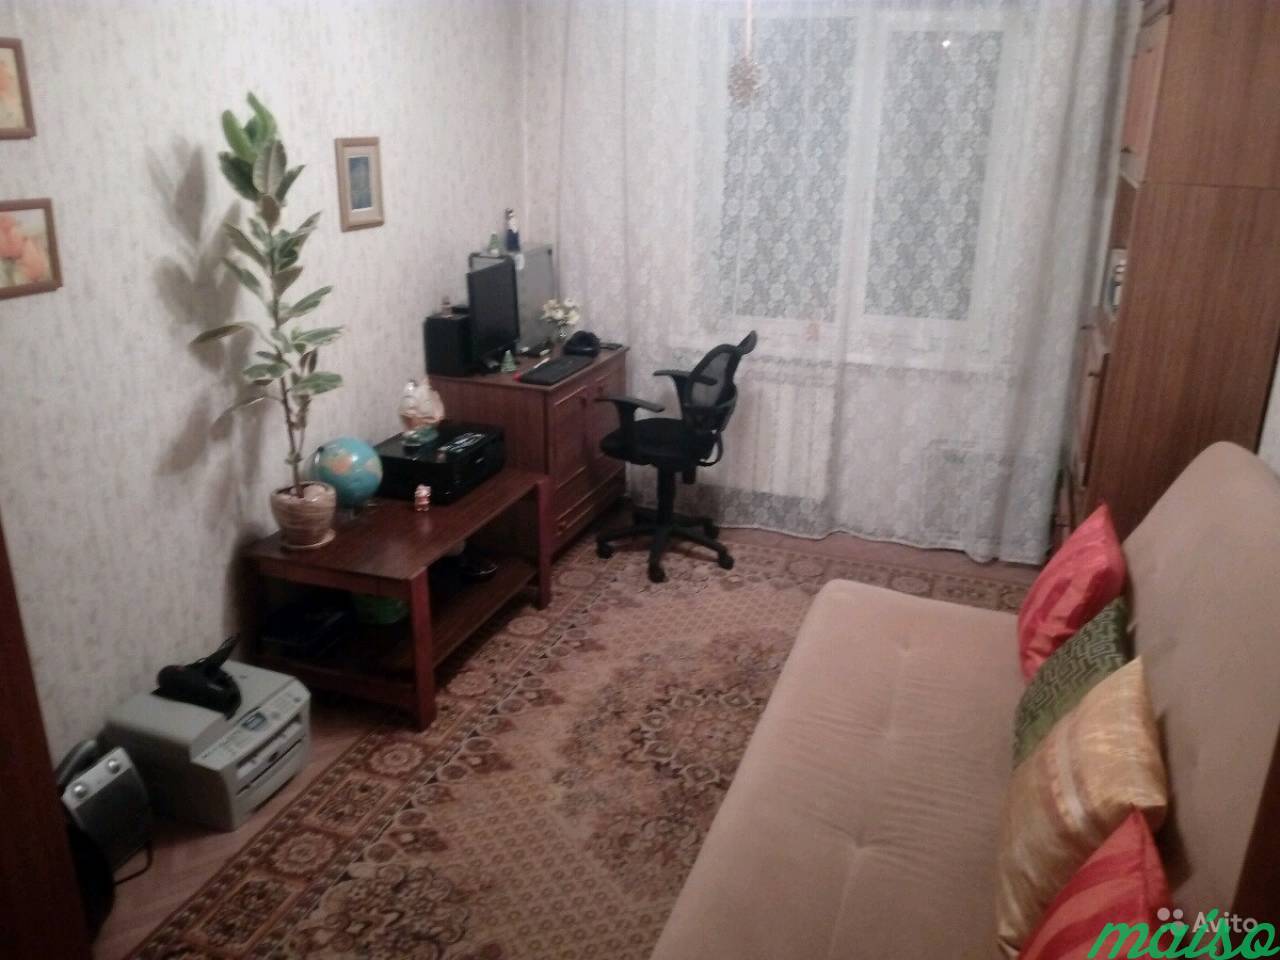 Комната 12 м² в 2-к, 1/5 эт. в Санкт-Петербурге. Фото 1